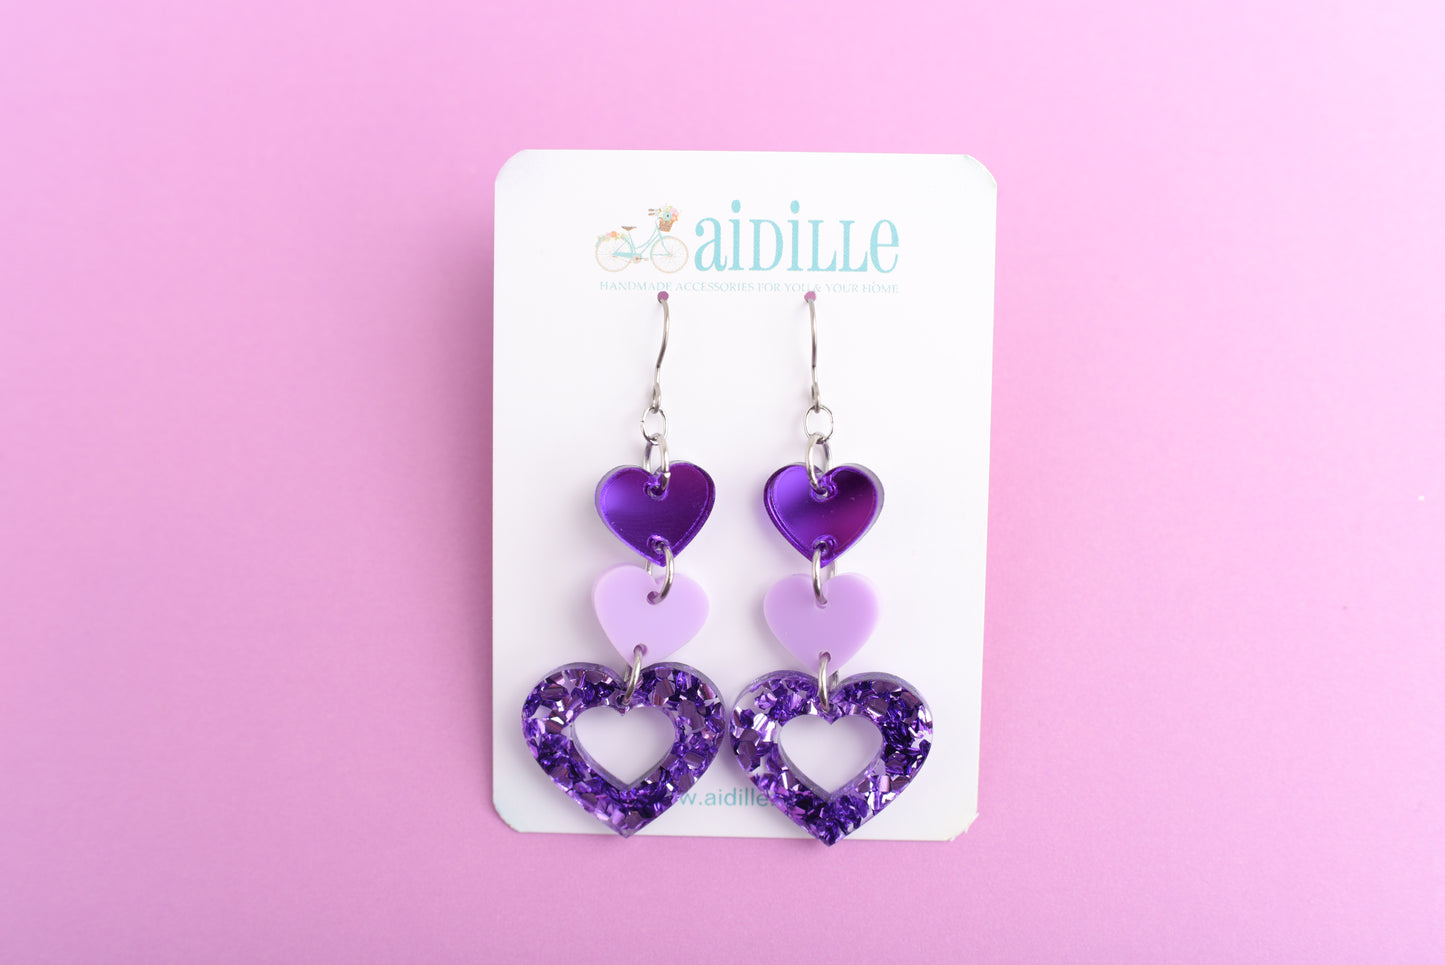 Chunky Glitter Purple Heart Dangle Earrings with Titanium Ear Wires